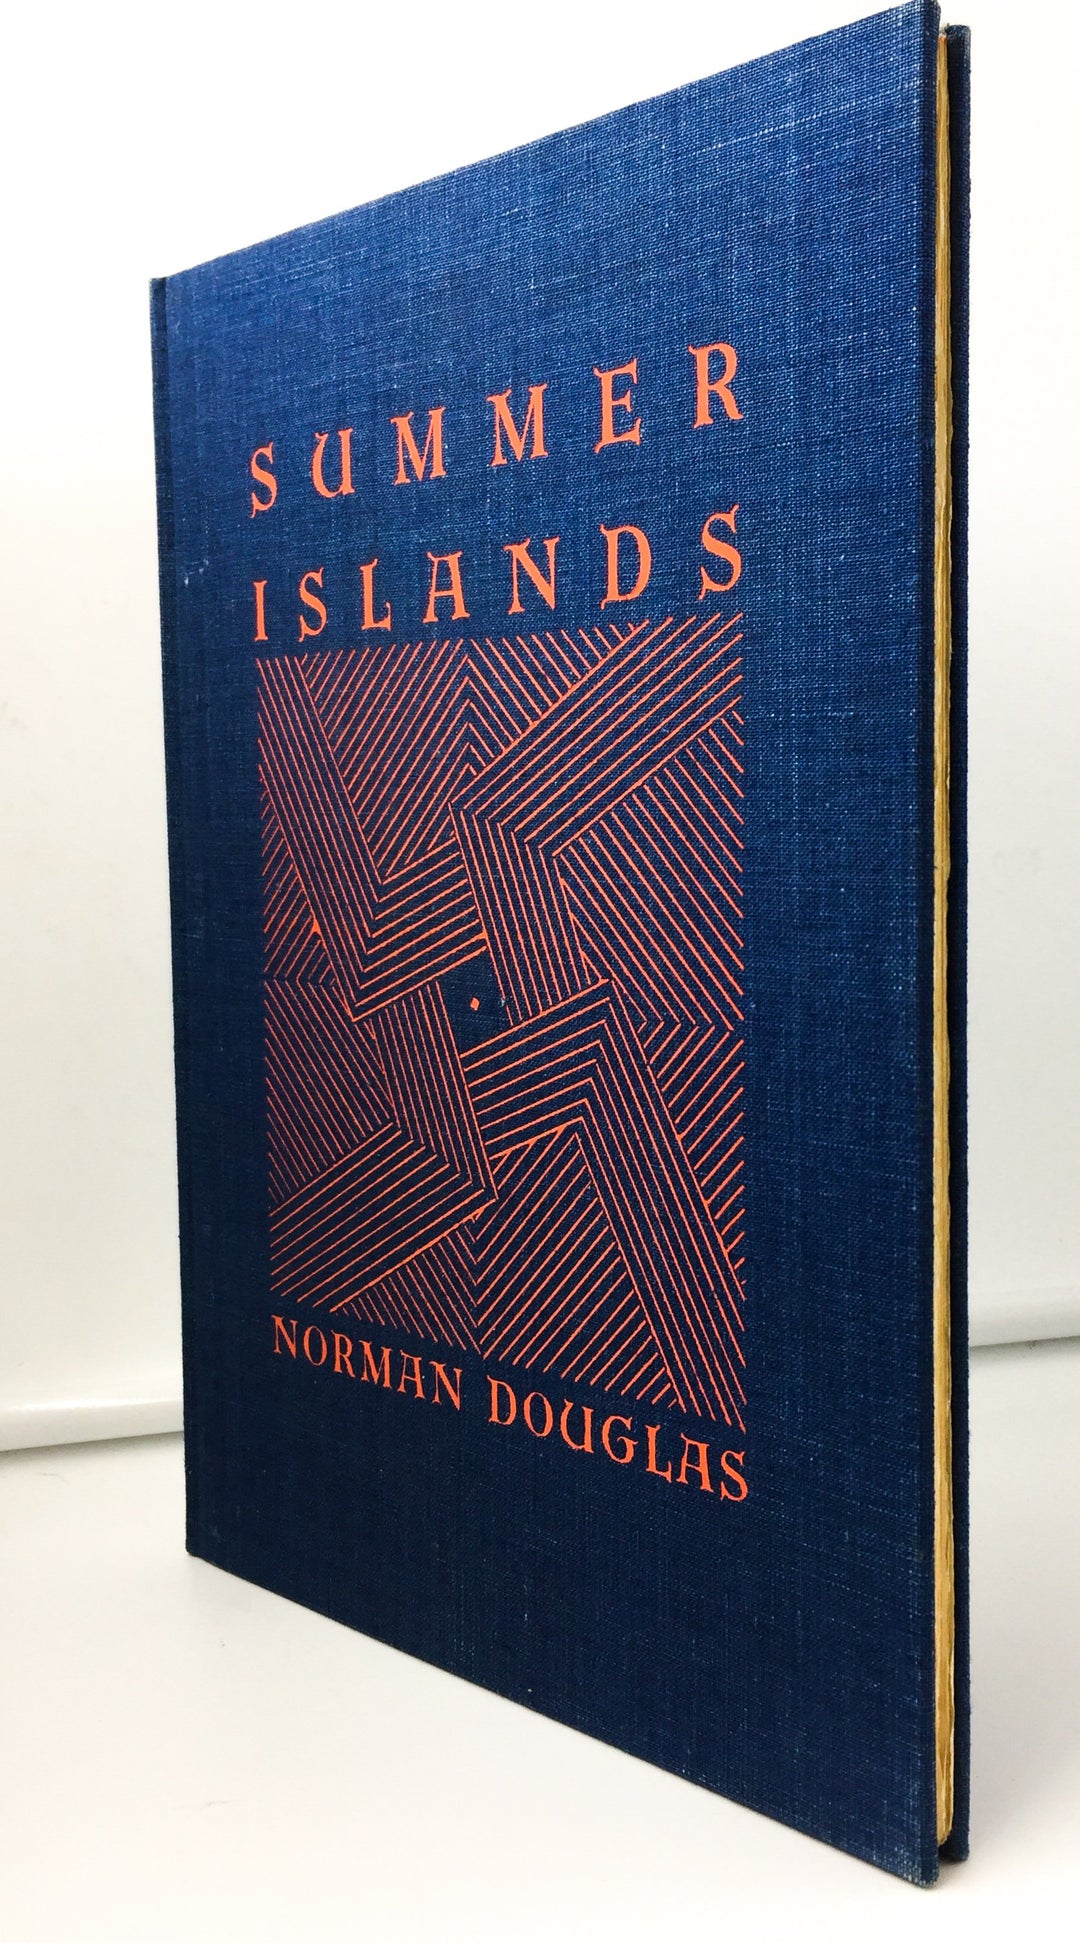 Douglas, Norman - Summer Islands - SIGNED | image4